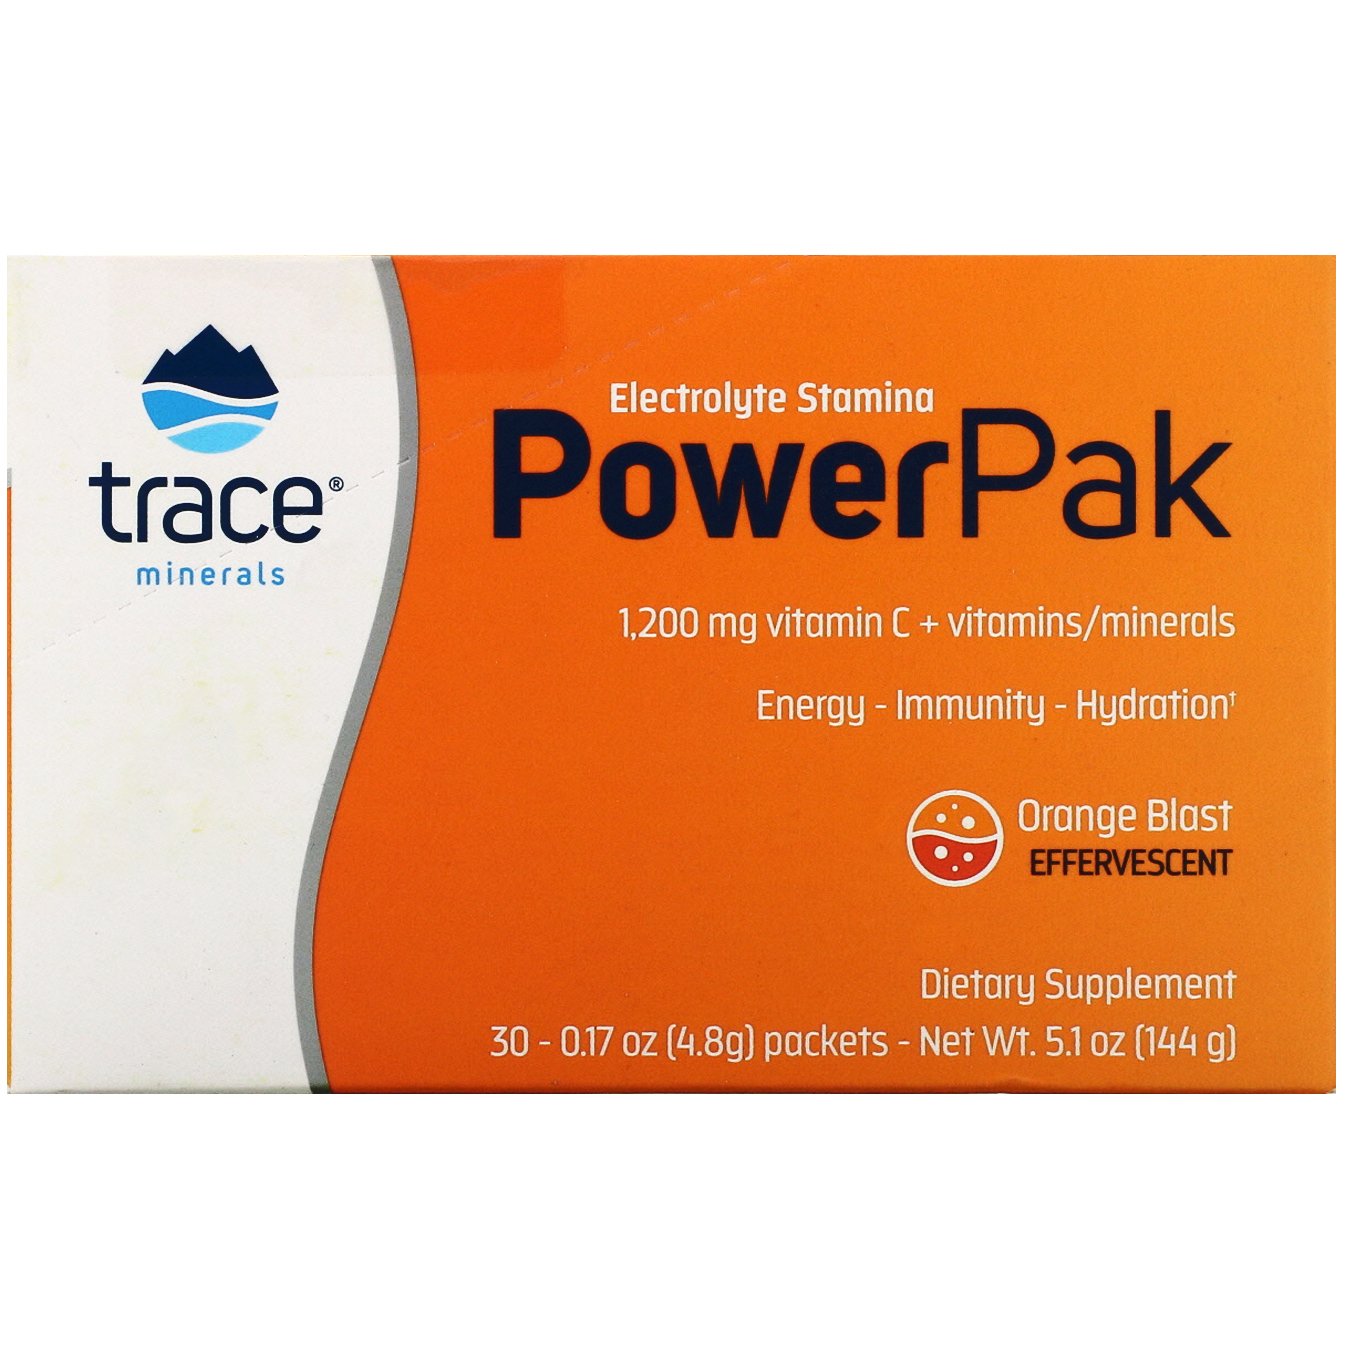 Trace Minerals Research, Electrolyte Stamina PowerPak, Orange Blast, 30 Packets, 0.17 oz (4.8 g) Each